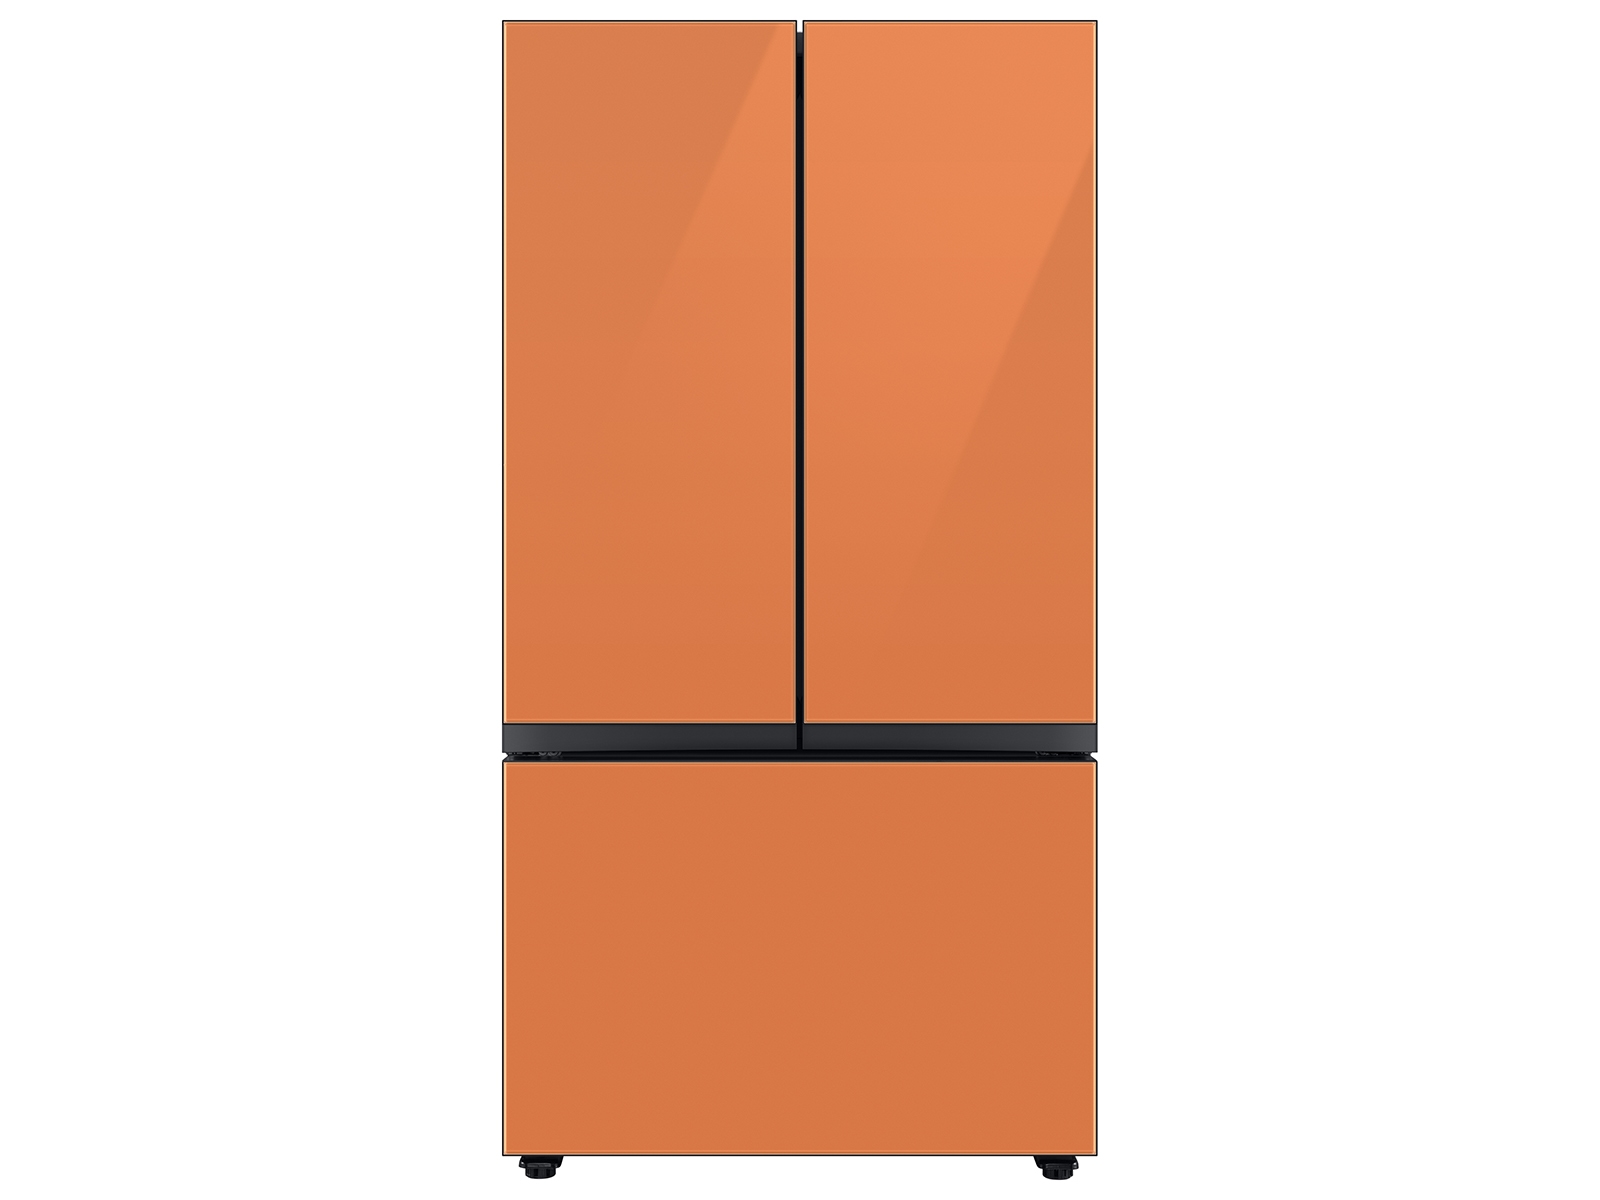 Samsung Bespoke 3-Door French Door Refrigerator (30 cu. ft.) with AutoFill Water Pitcher in Clementine Glass(BNDL-1650467138762)